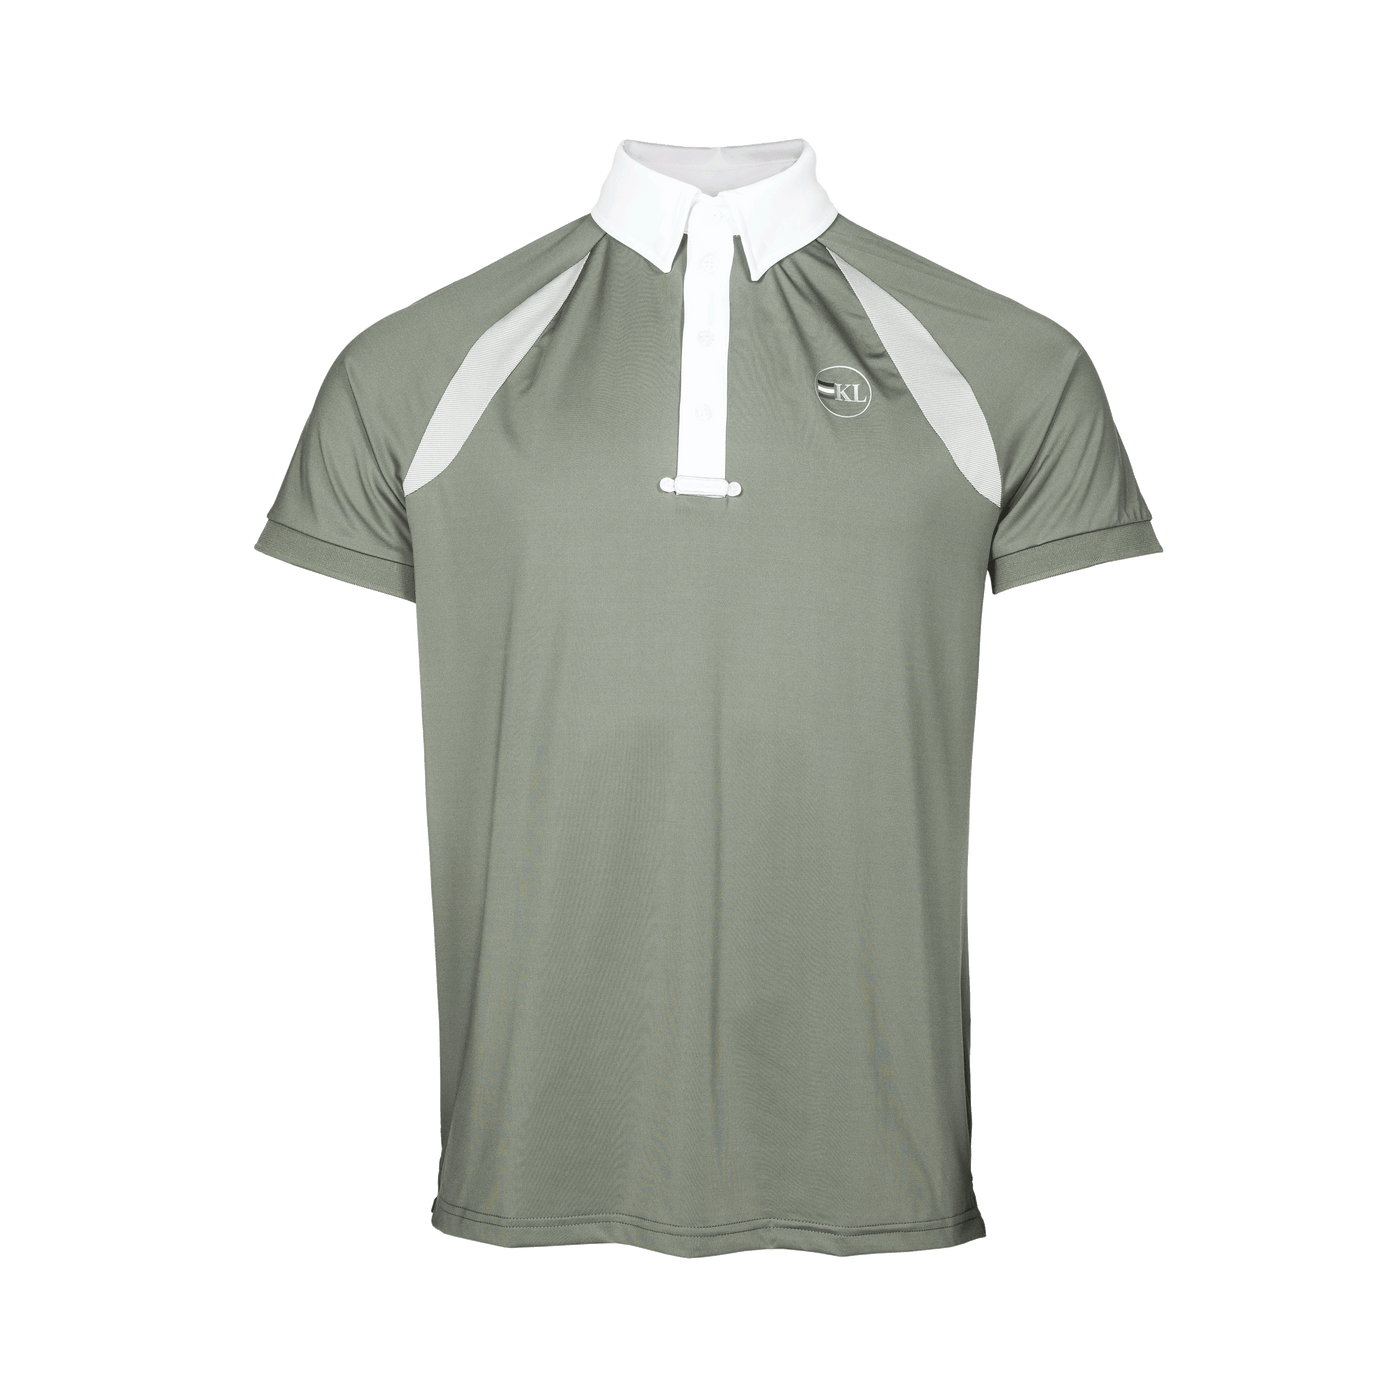 Kingsland Bryce Mens Short Sleeve Show Shirt